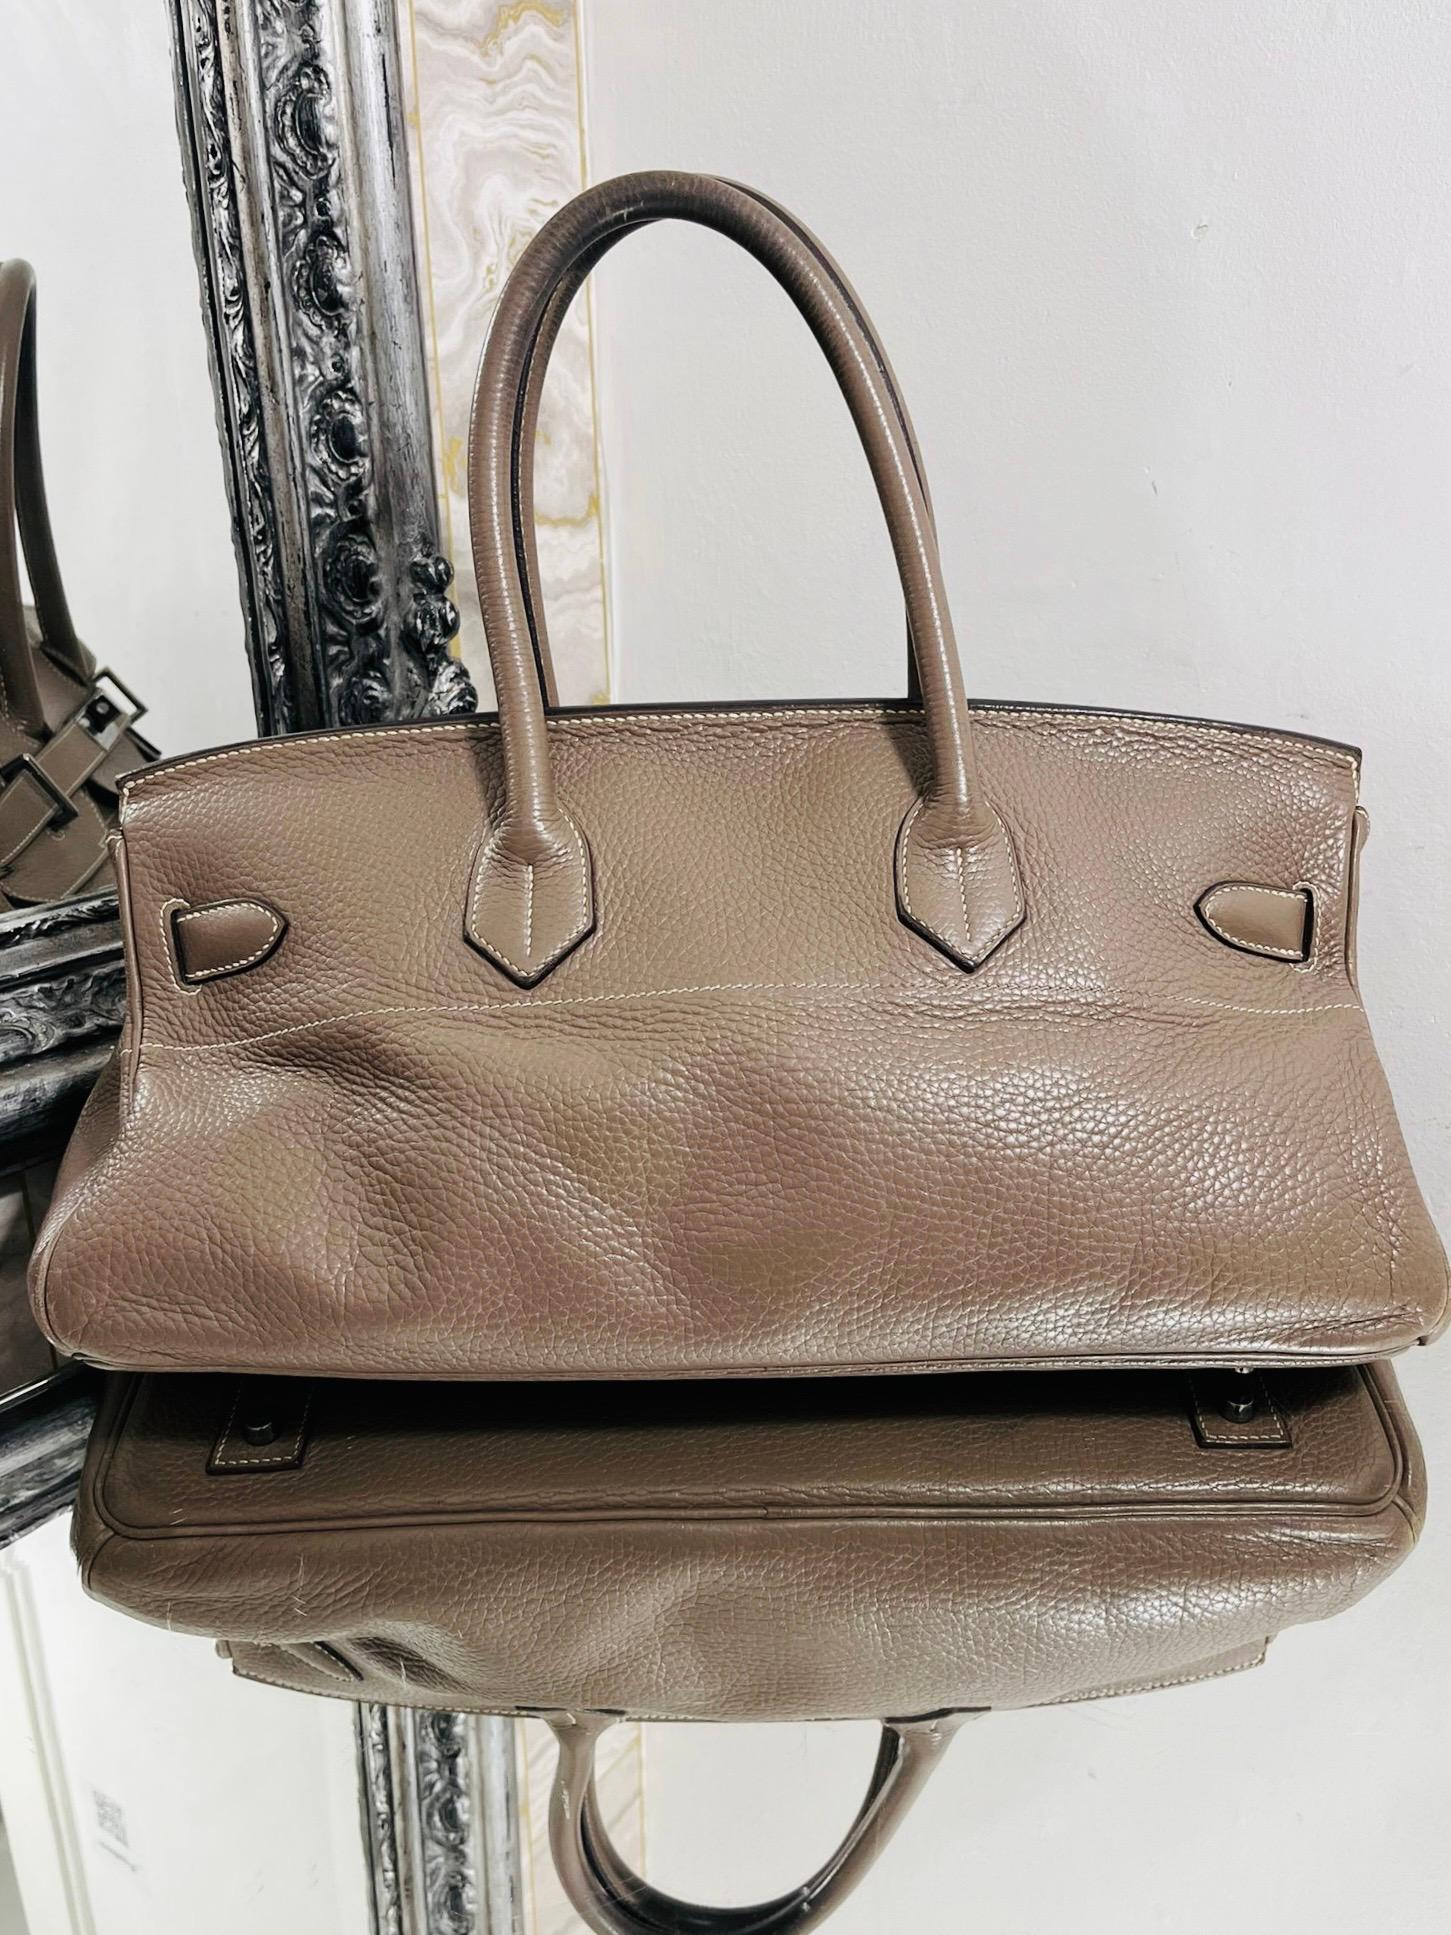 Brown Hermes Jean Paul  Gaultier Birkin 42cm Bag For Sale